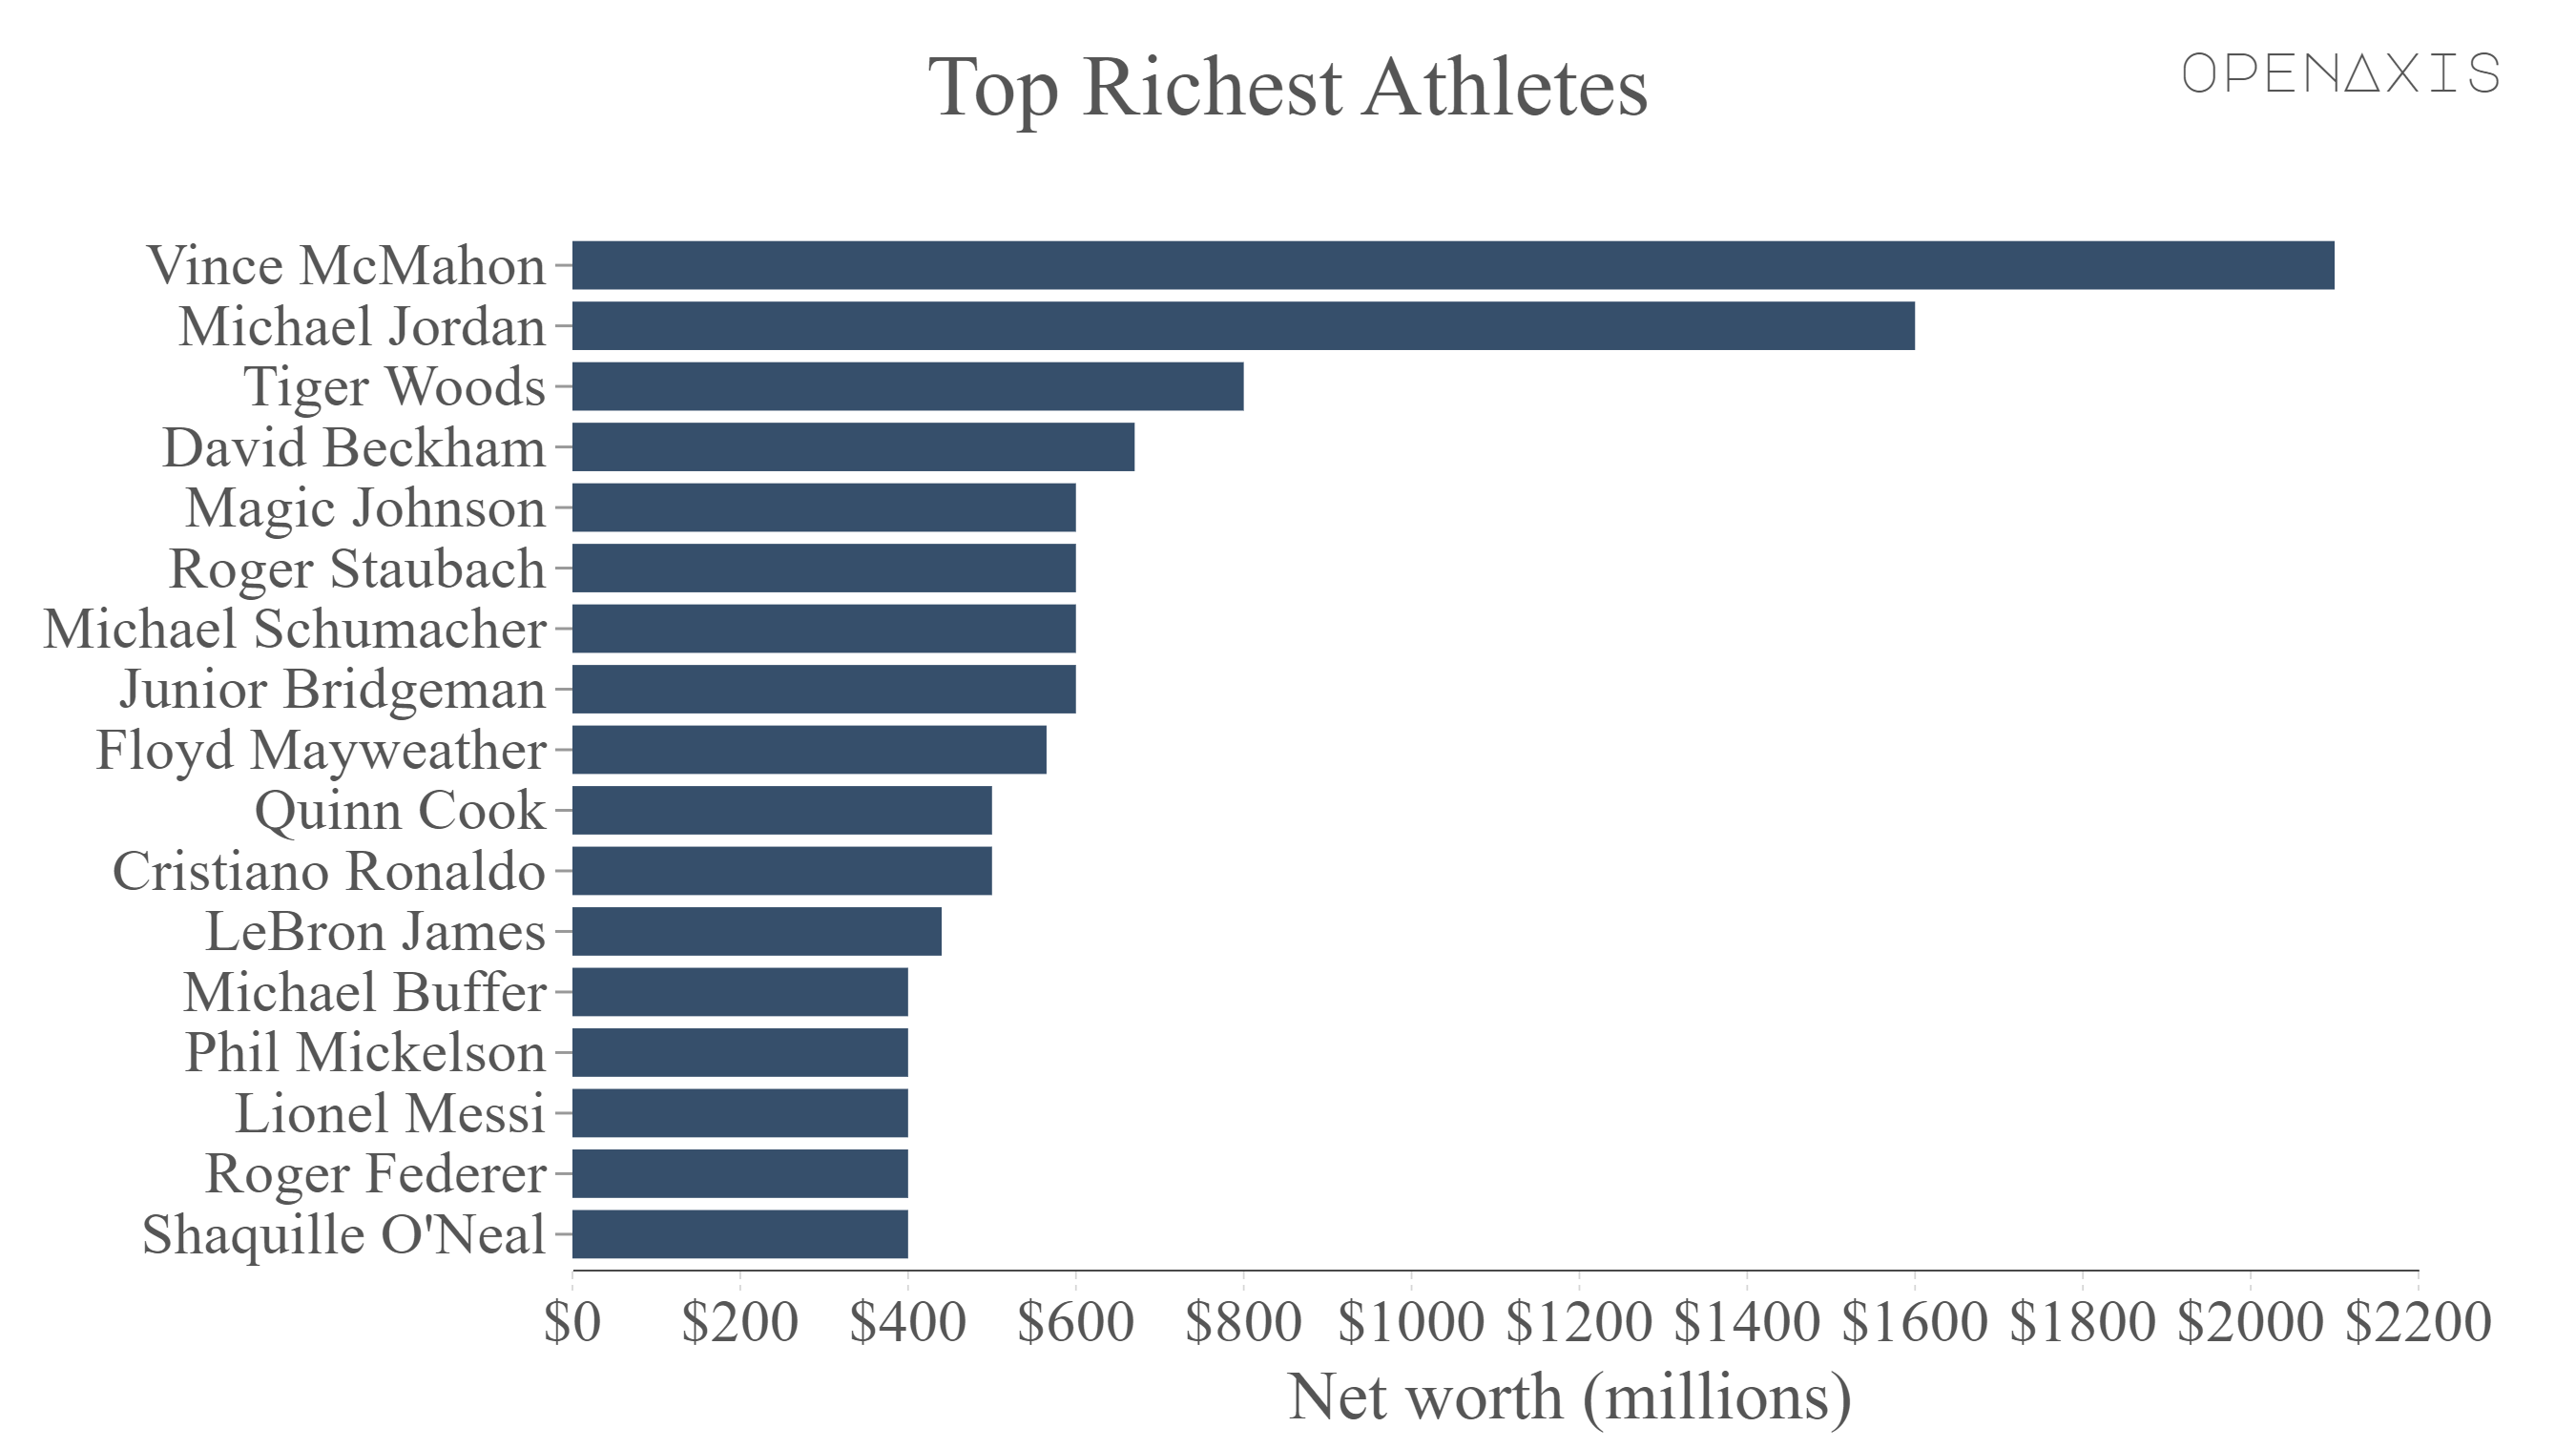 "Top Richest Athletes "